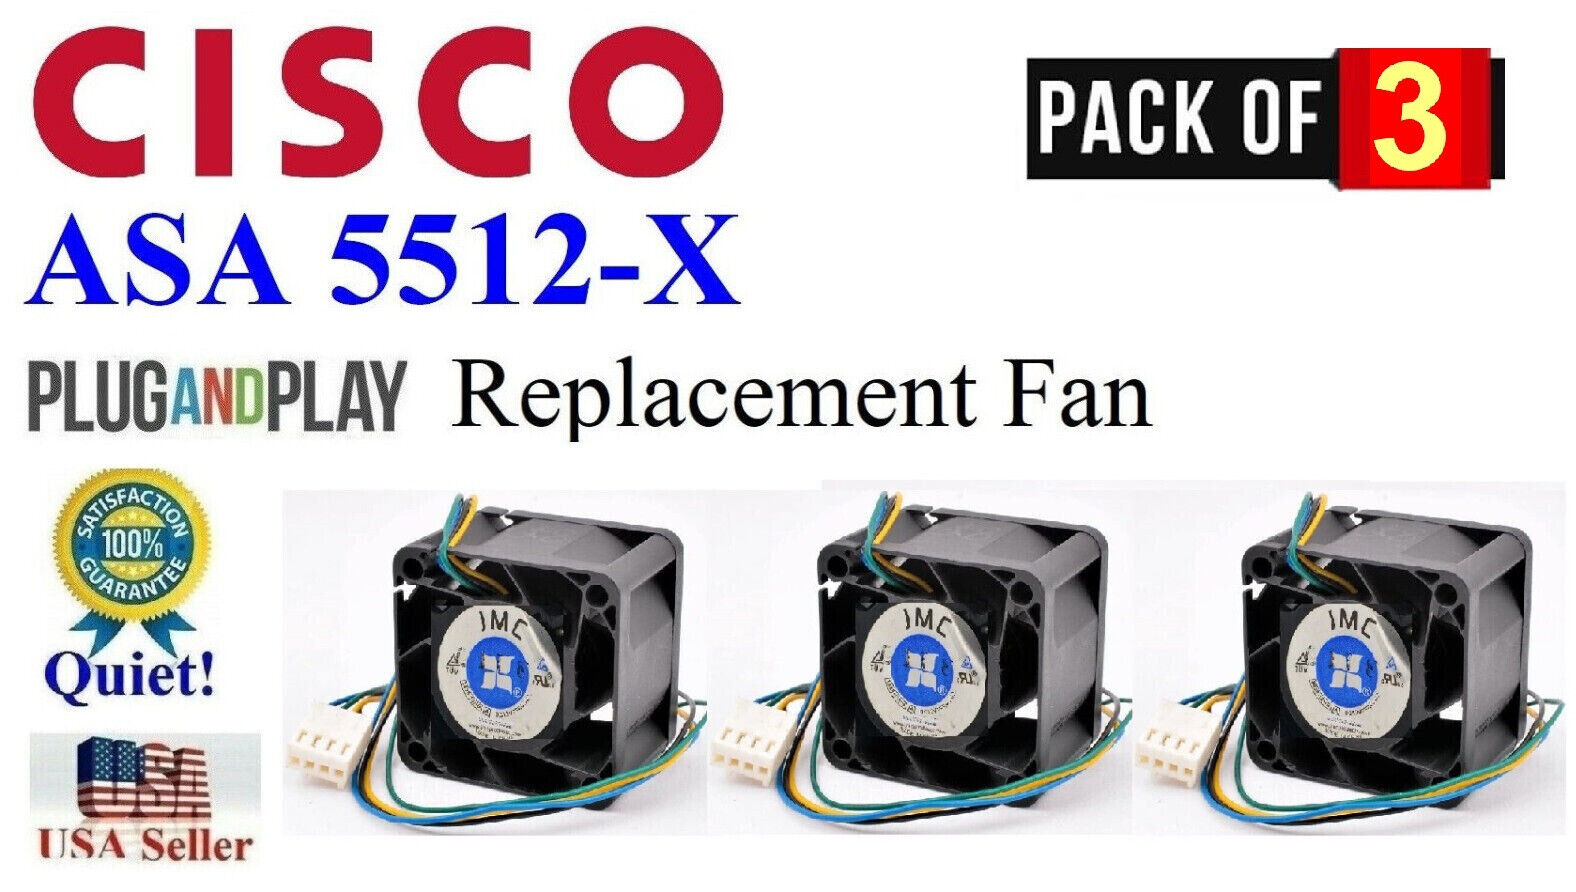 3x *QUIET* Version Replacement Fans for Cisco ASA 5512-X ASA5515-X